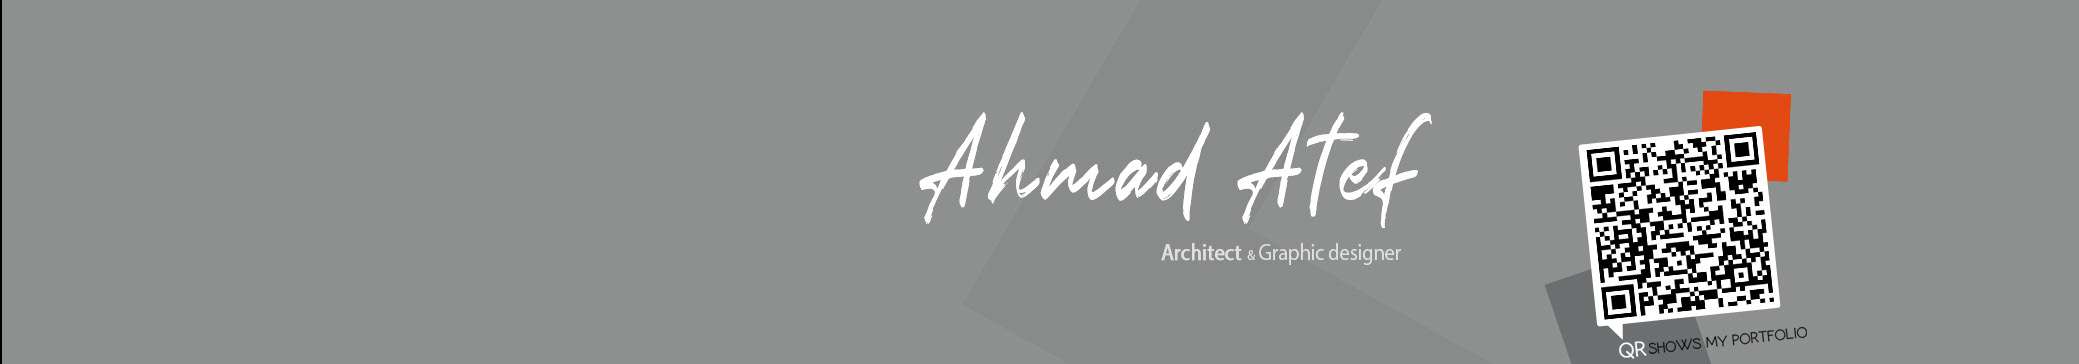 Ahmad Atefs profilbanner